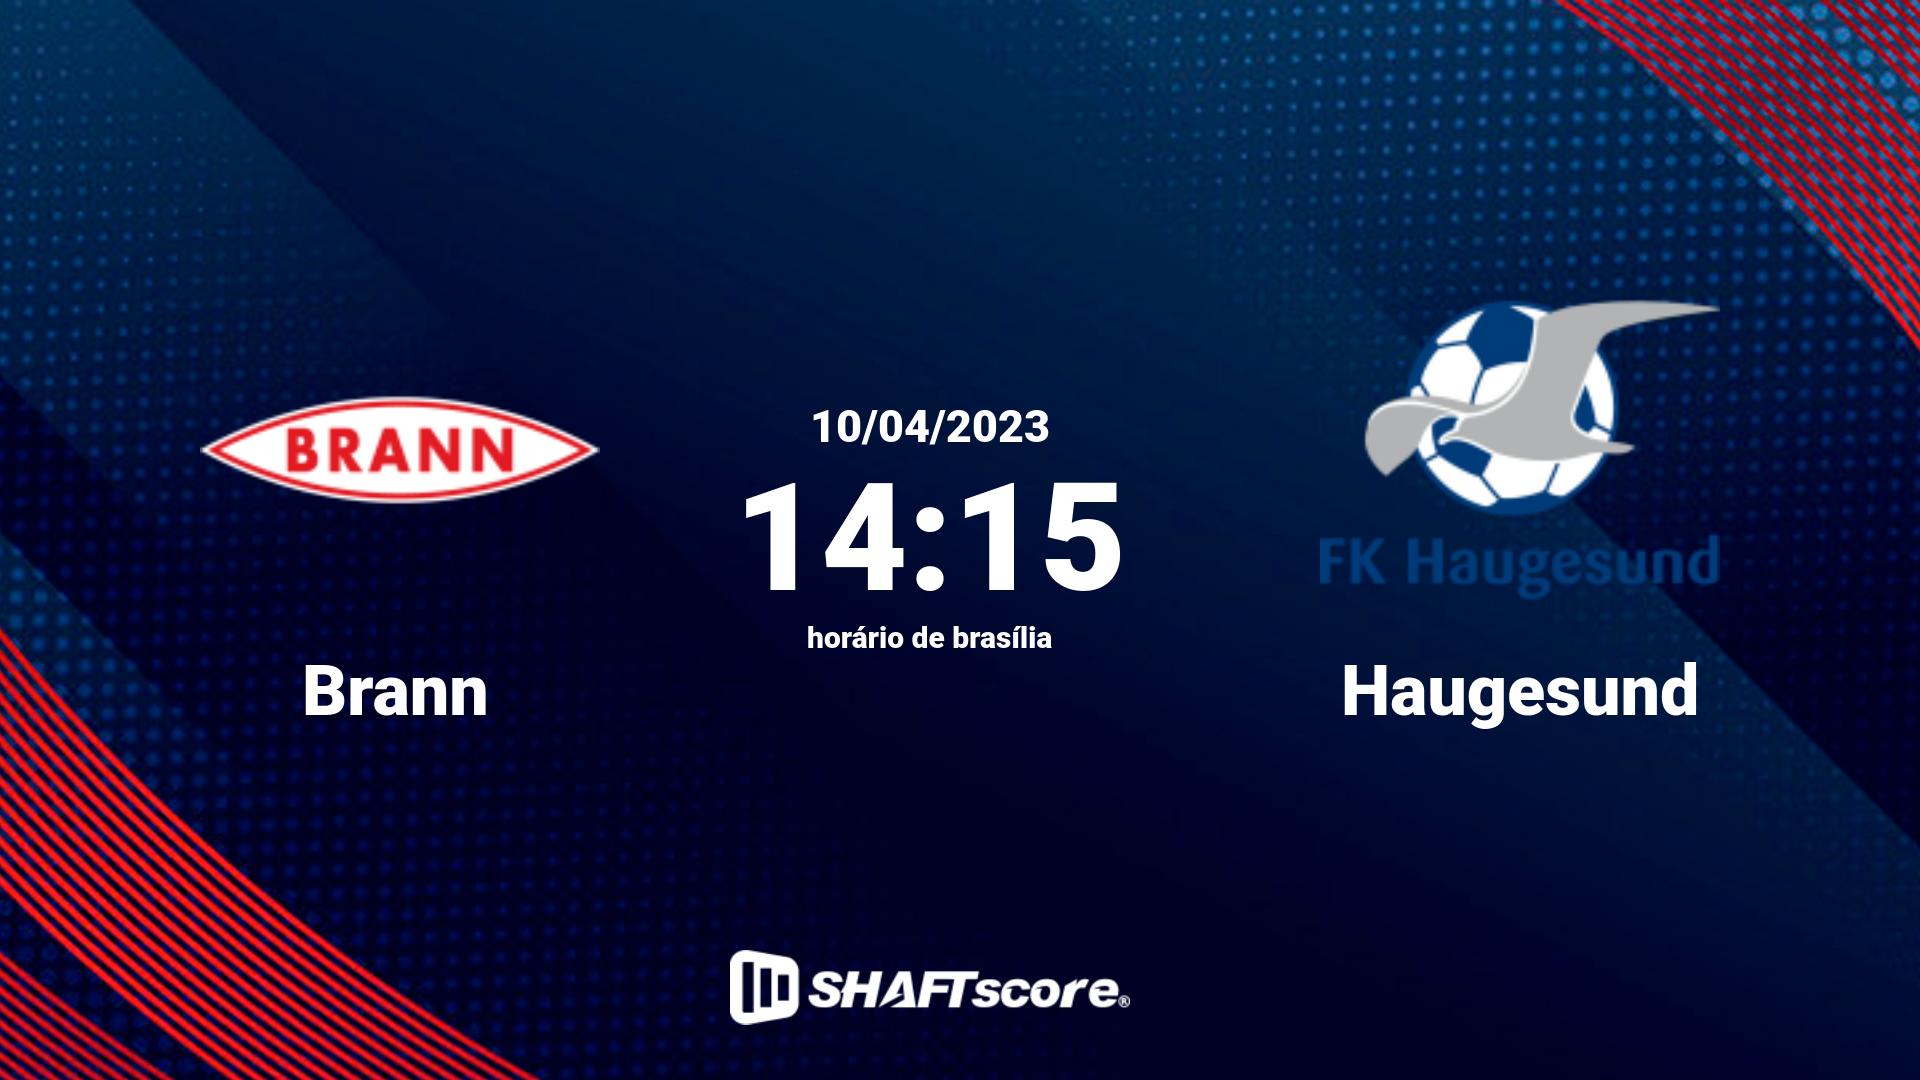 Estatísticas do jogo Brann vs Haugesund 10.04 14:15